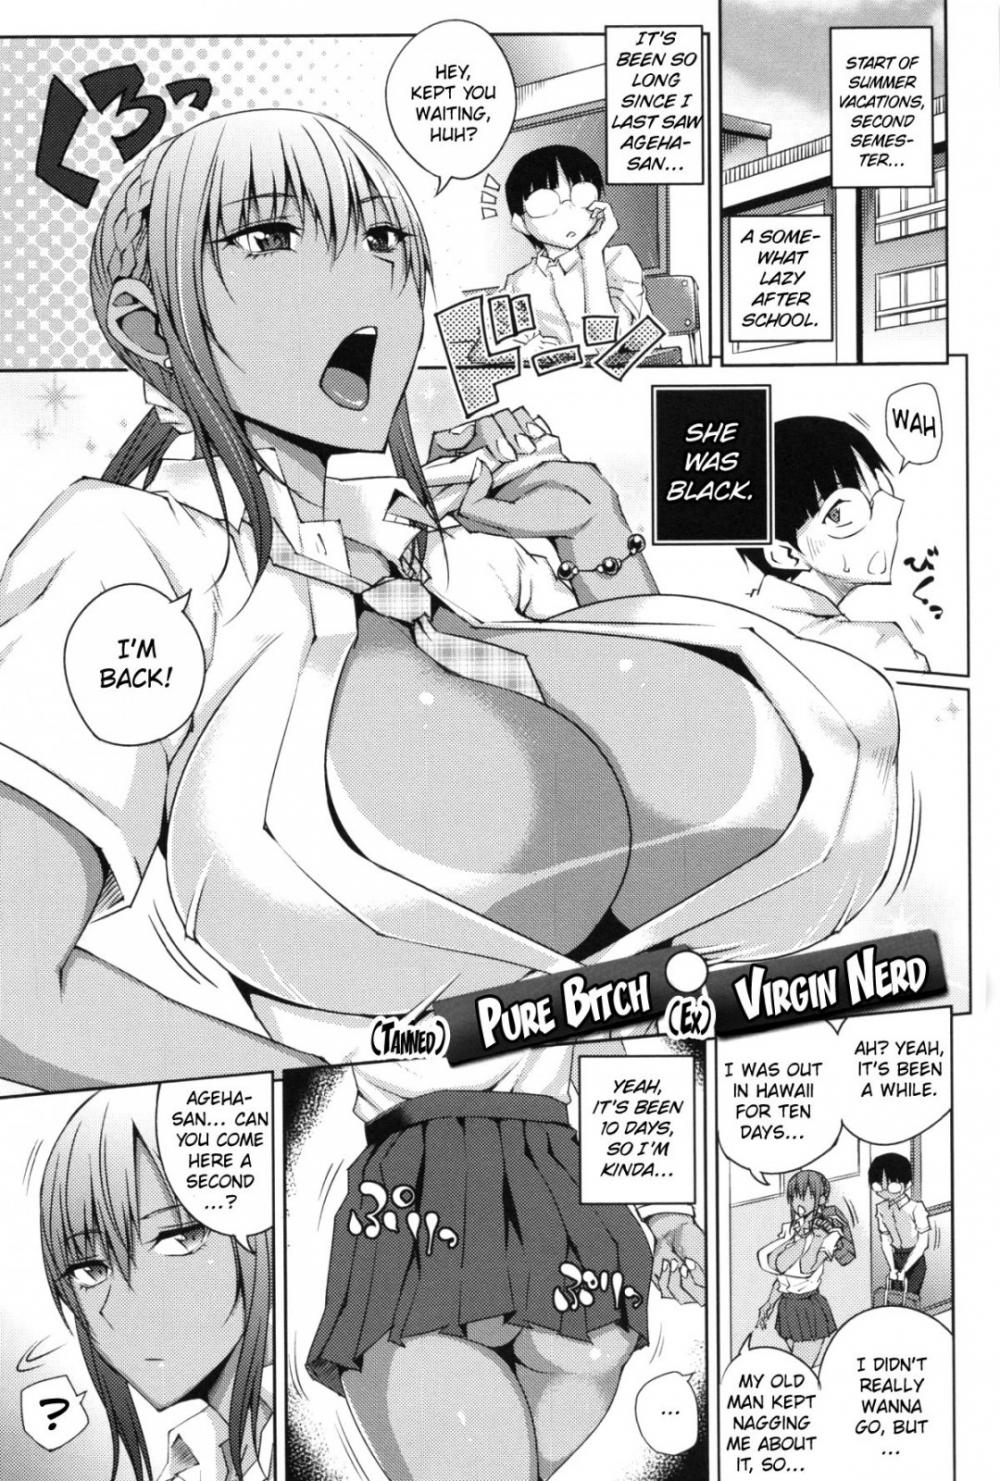 Hentai Manga Comic-Pure Bitch & Virgin Nerd-Read-42